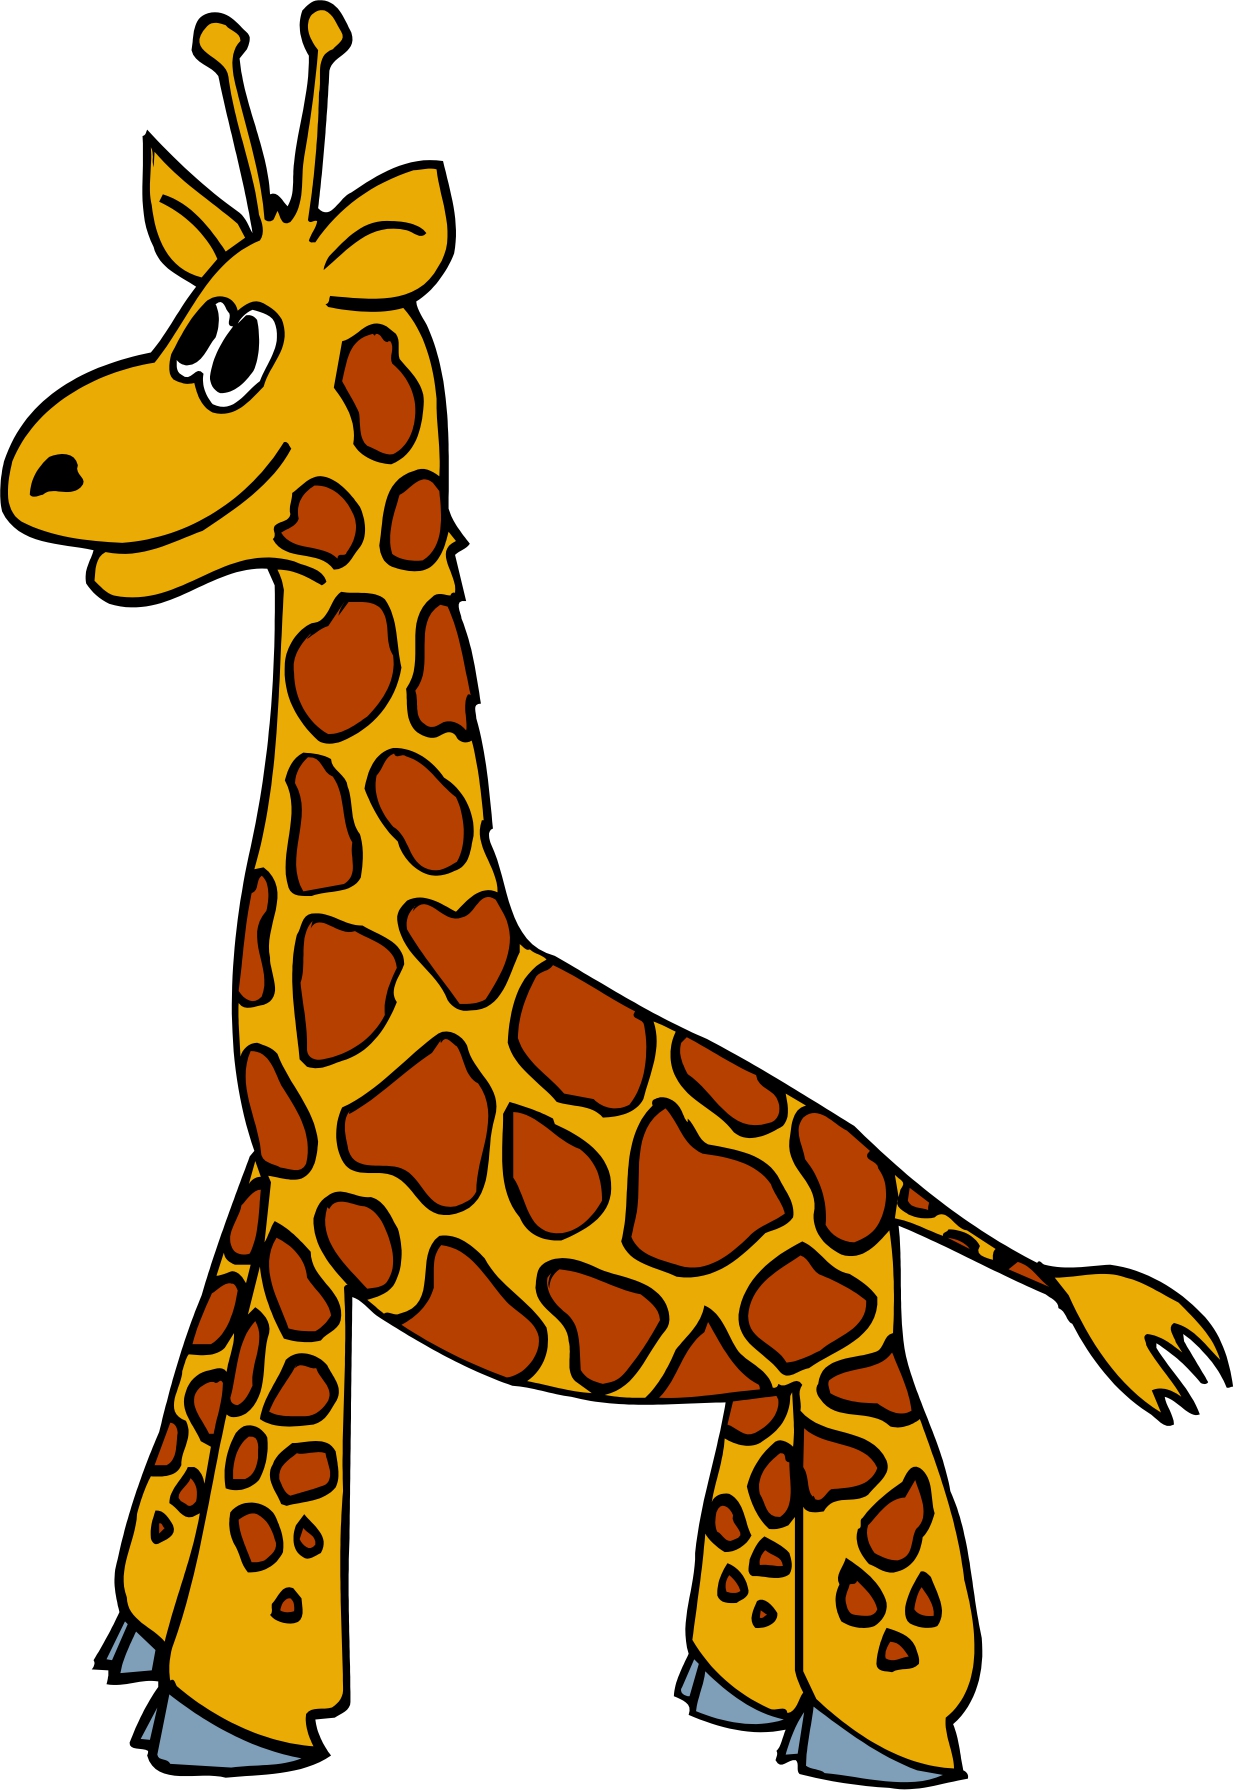 Pics Of Cartoon Giraffes | Free Download Clip Art | Free Clip Art ...